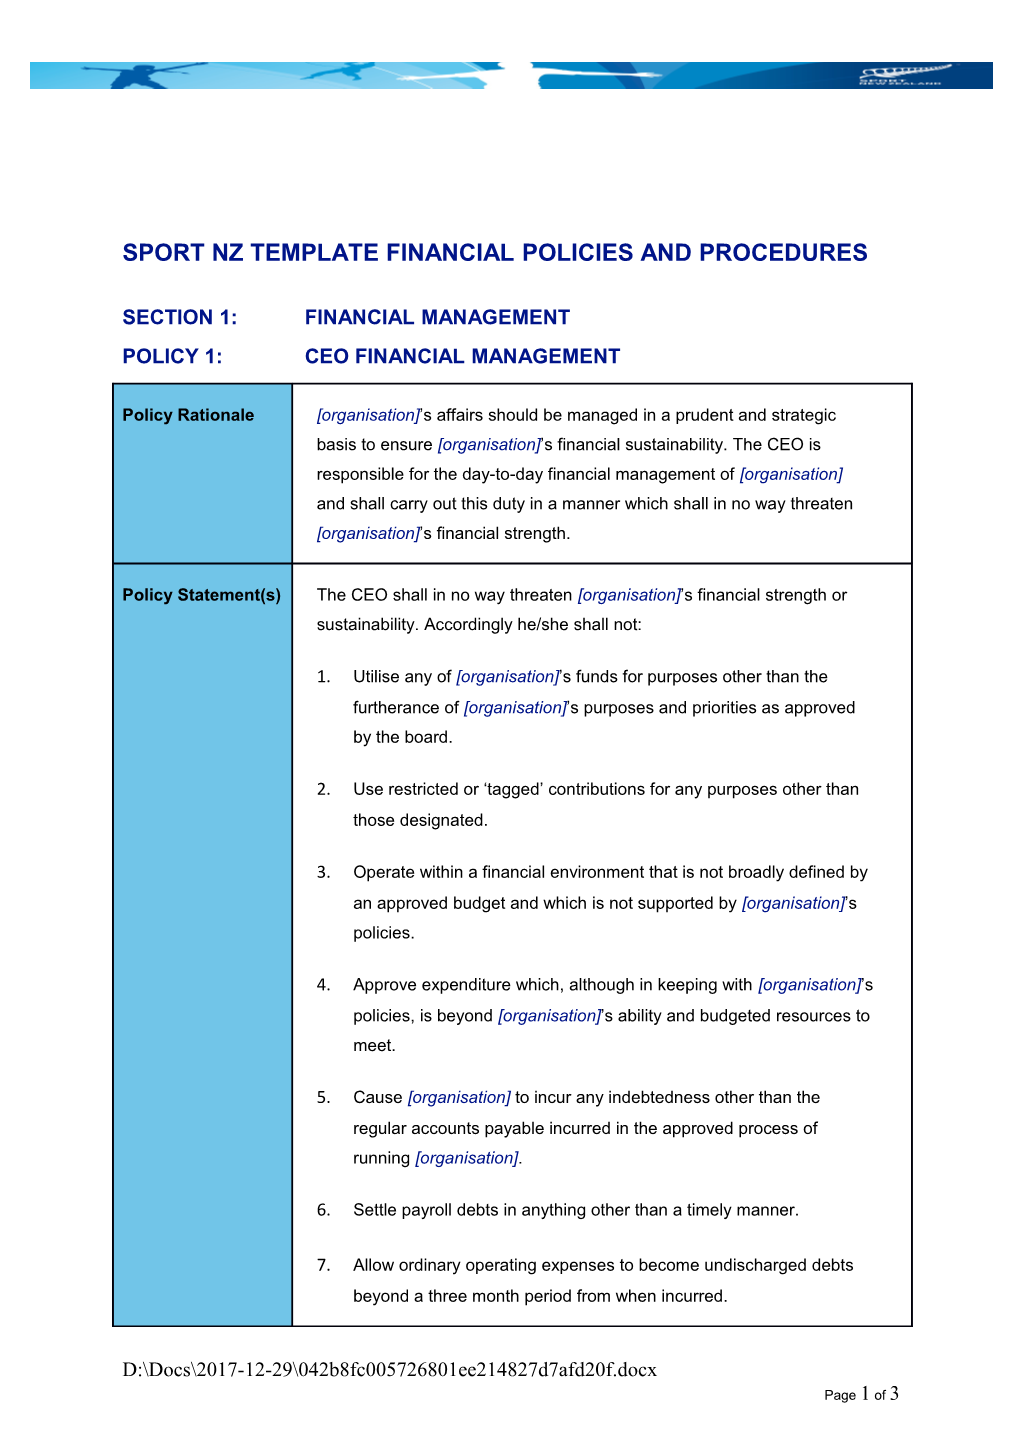 Sport Nz Template Financial Policies and Procedures